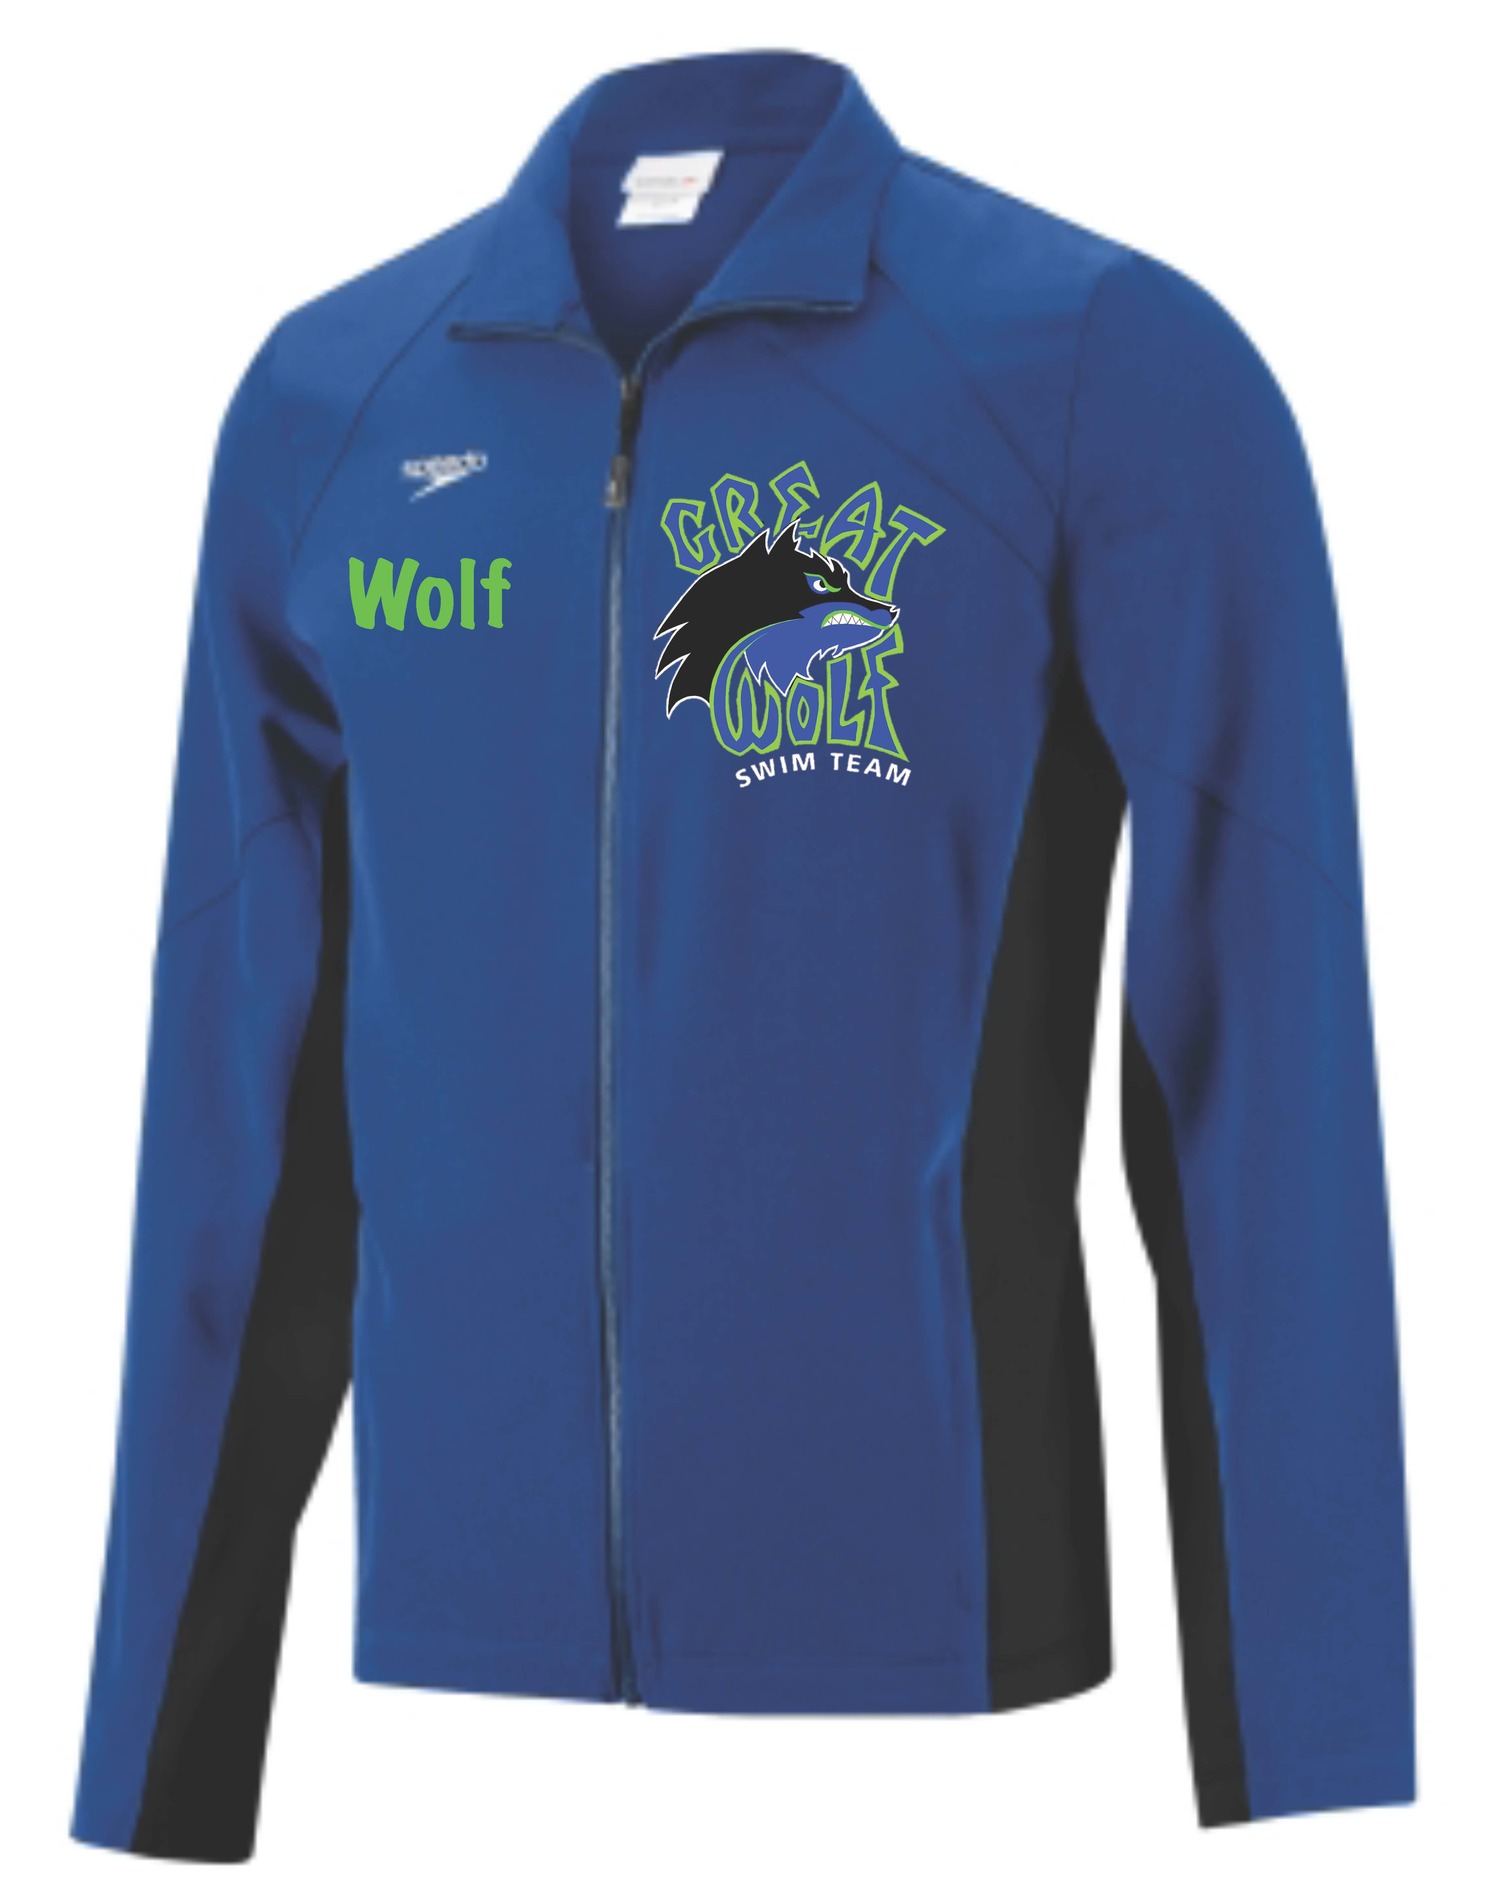 Warmup Jacket — Wolf Wear